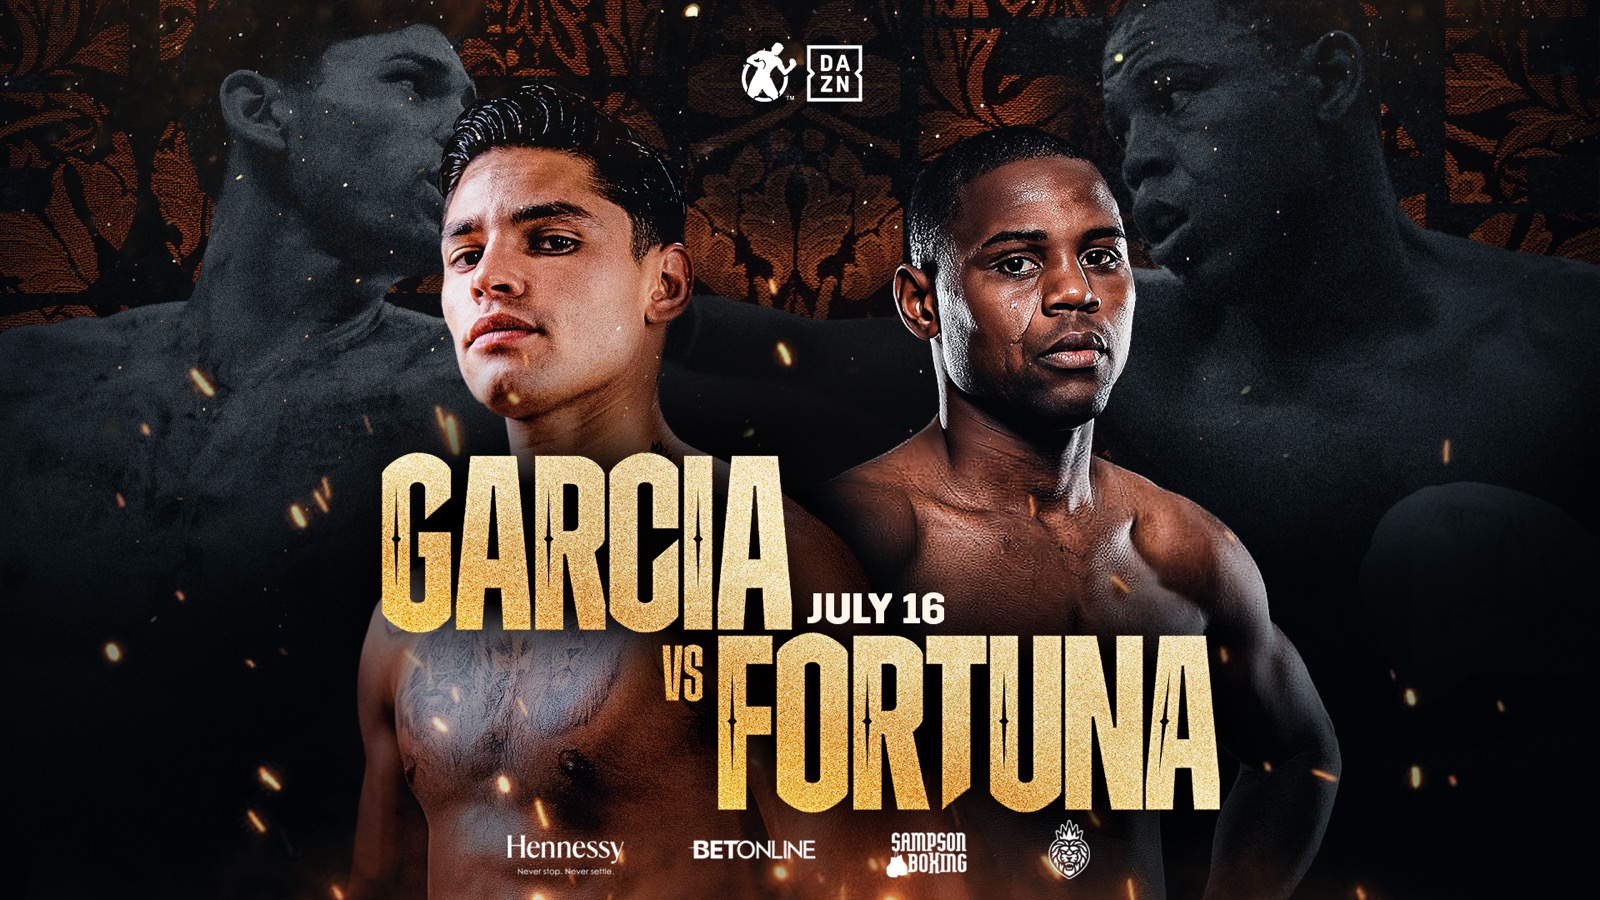 Ryan Garcia vs Fortuna on July 16 LIVE on DAZN